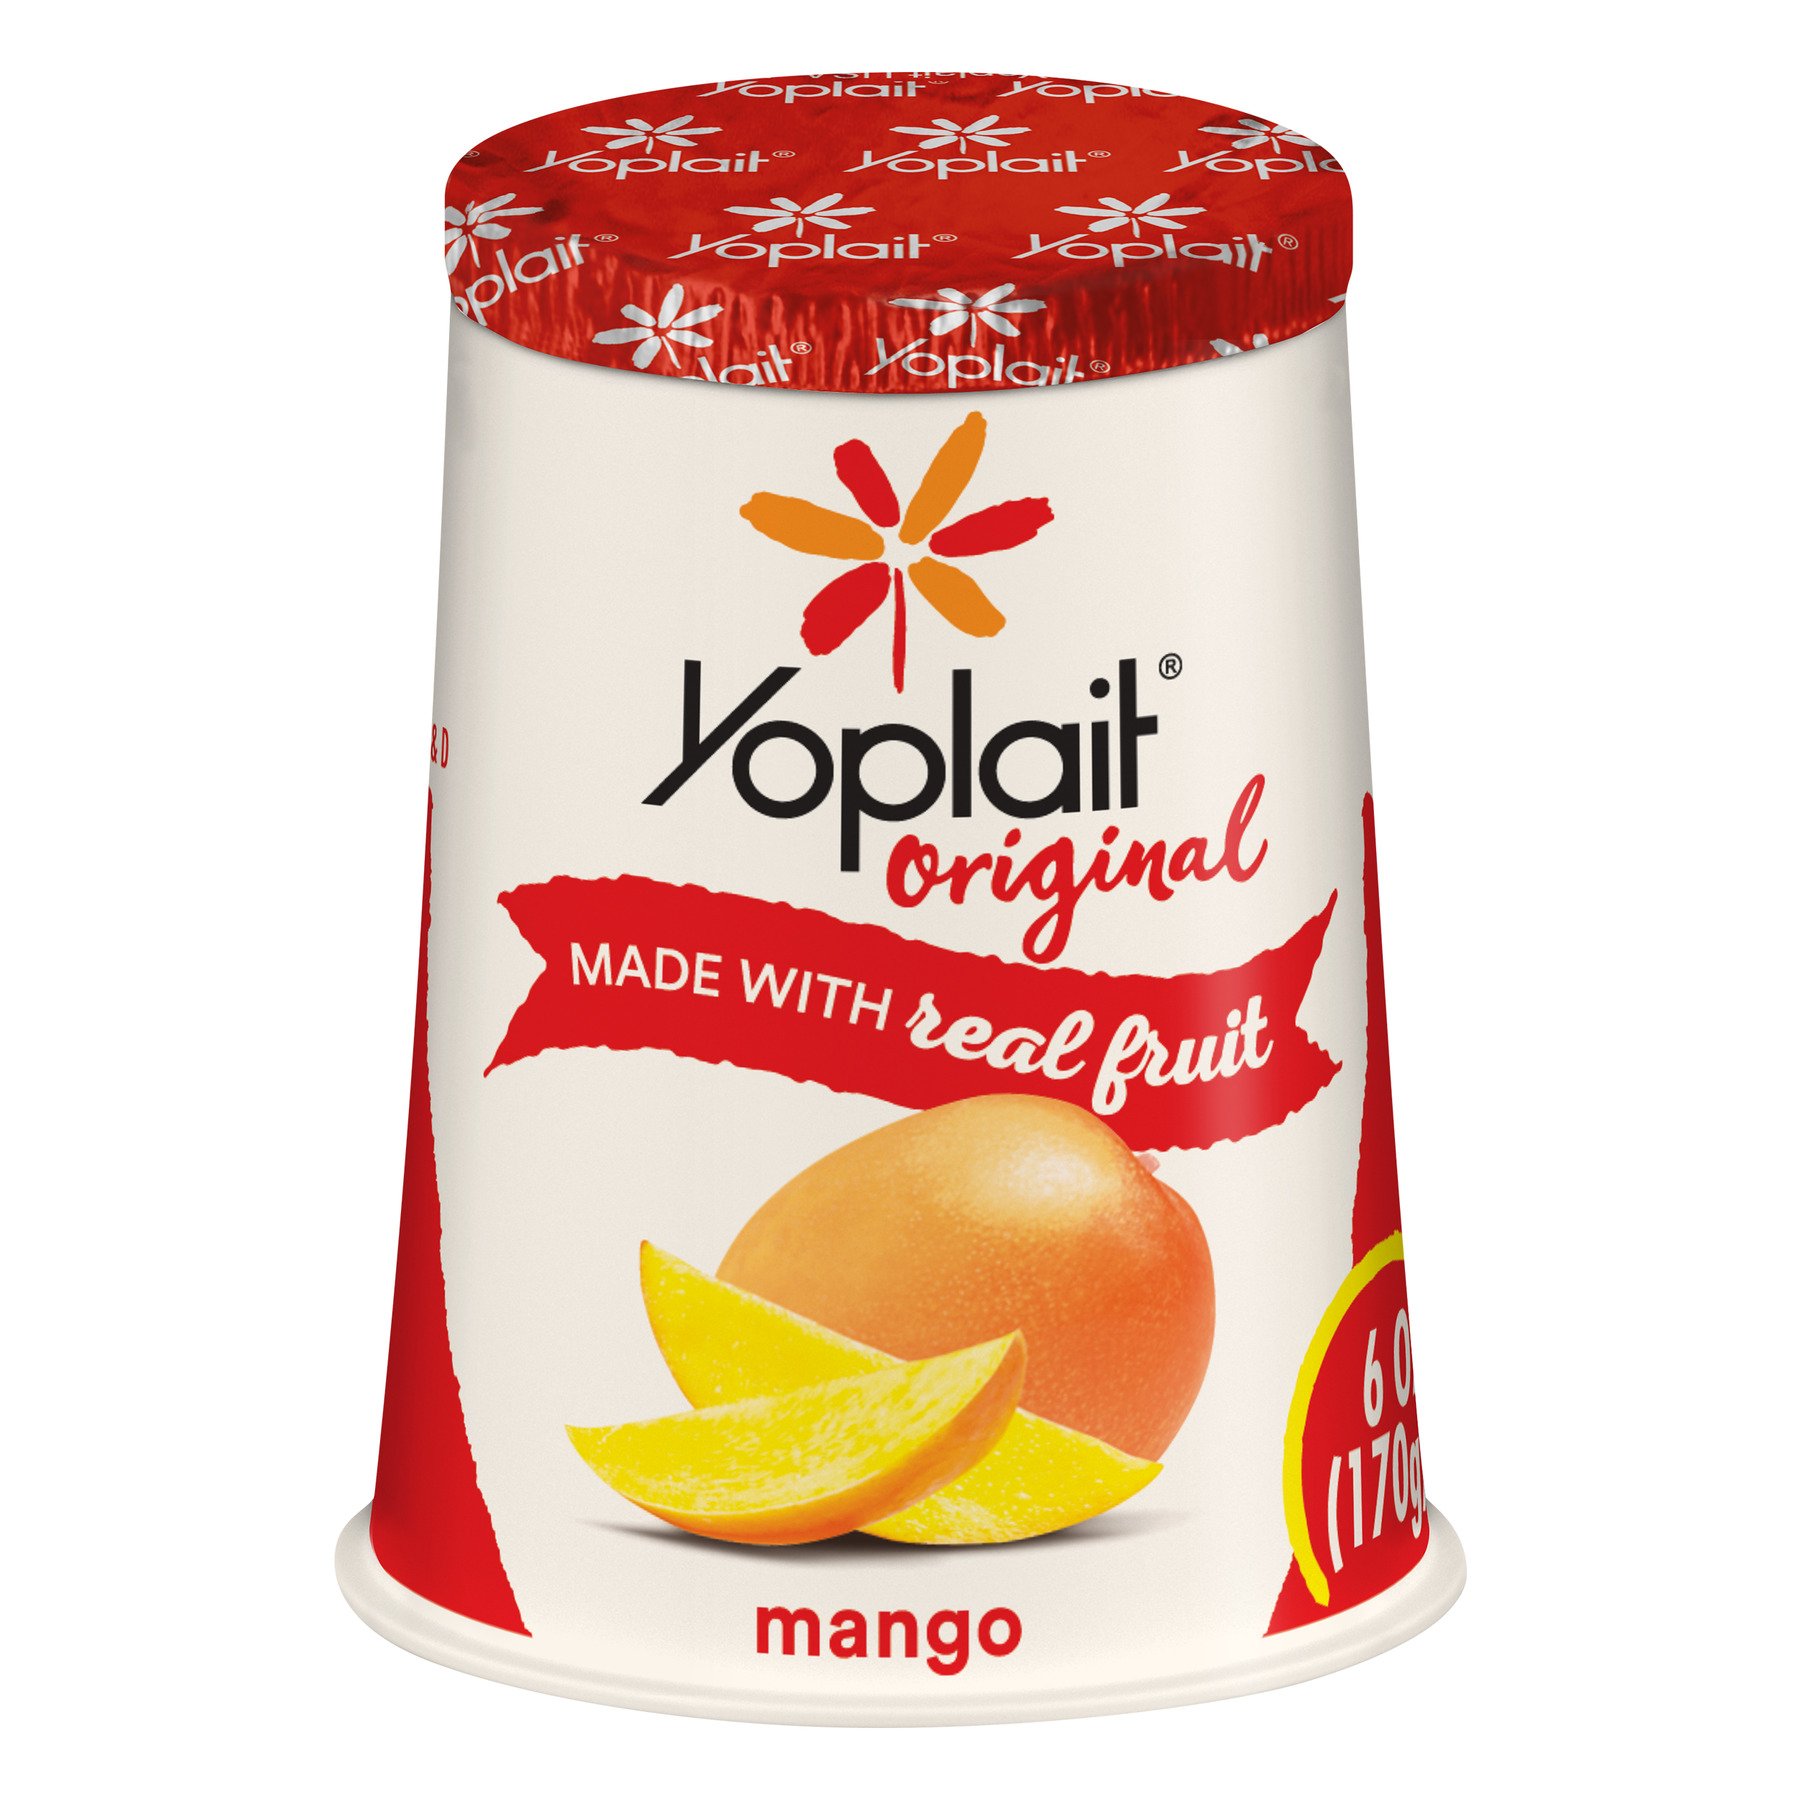 Yoplait Gluten Free Original Yogurt Mango, 6 oz Cup ...